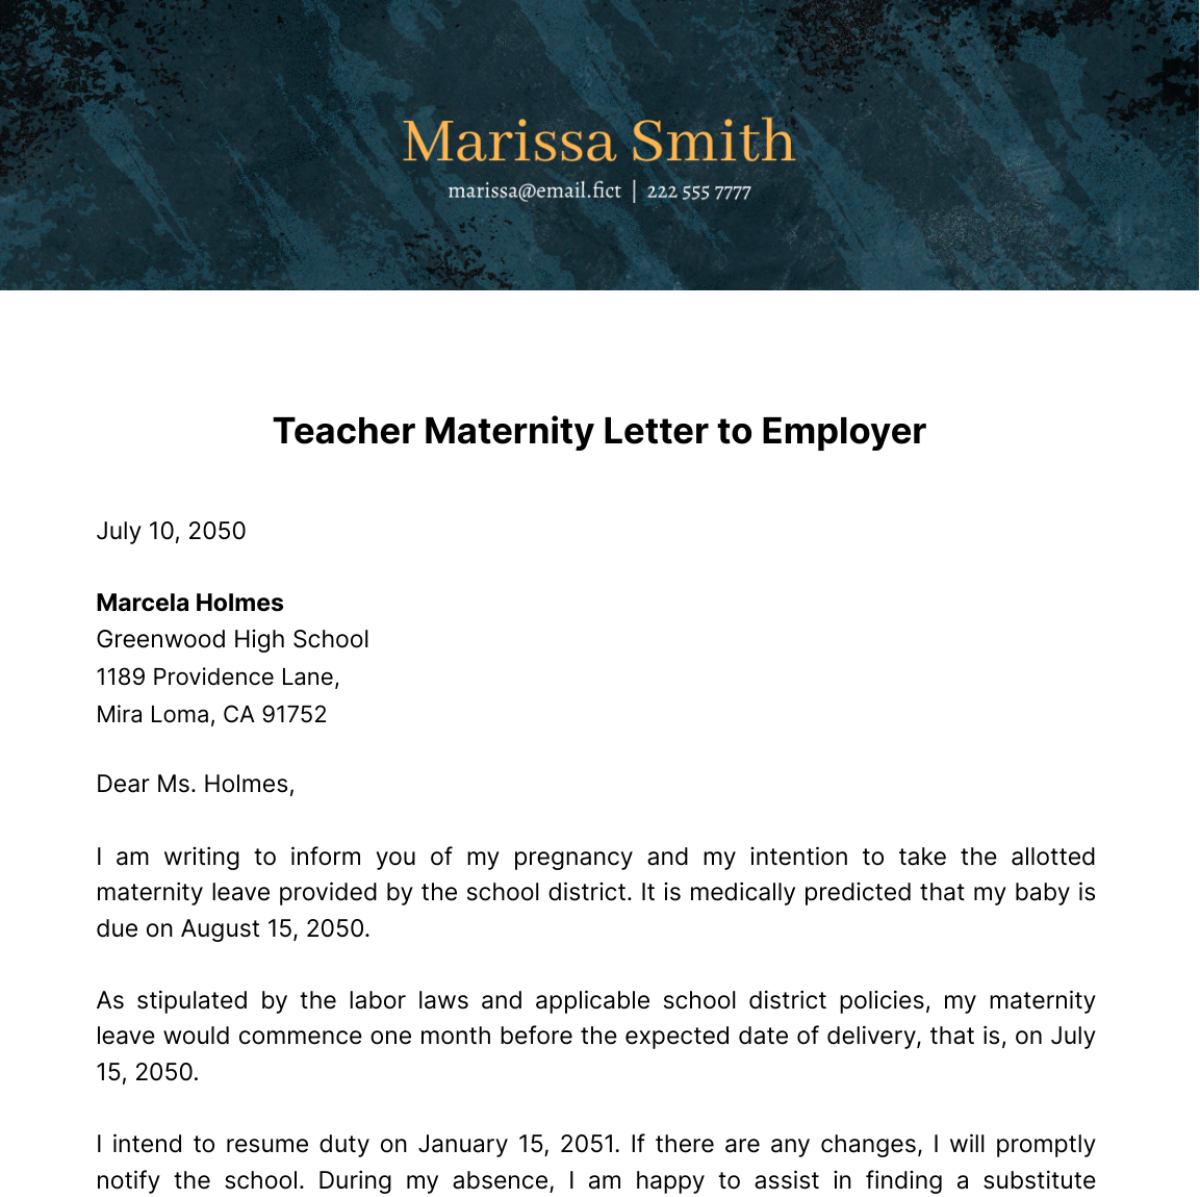 Teacher Maternity Letter to Employer Template